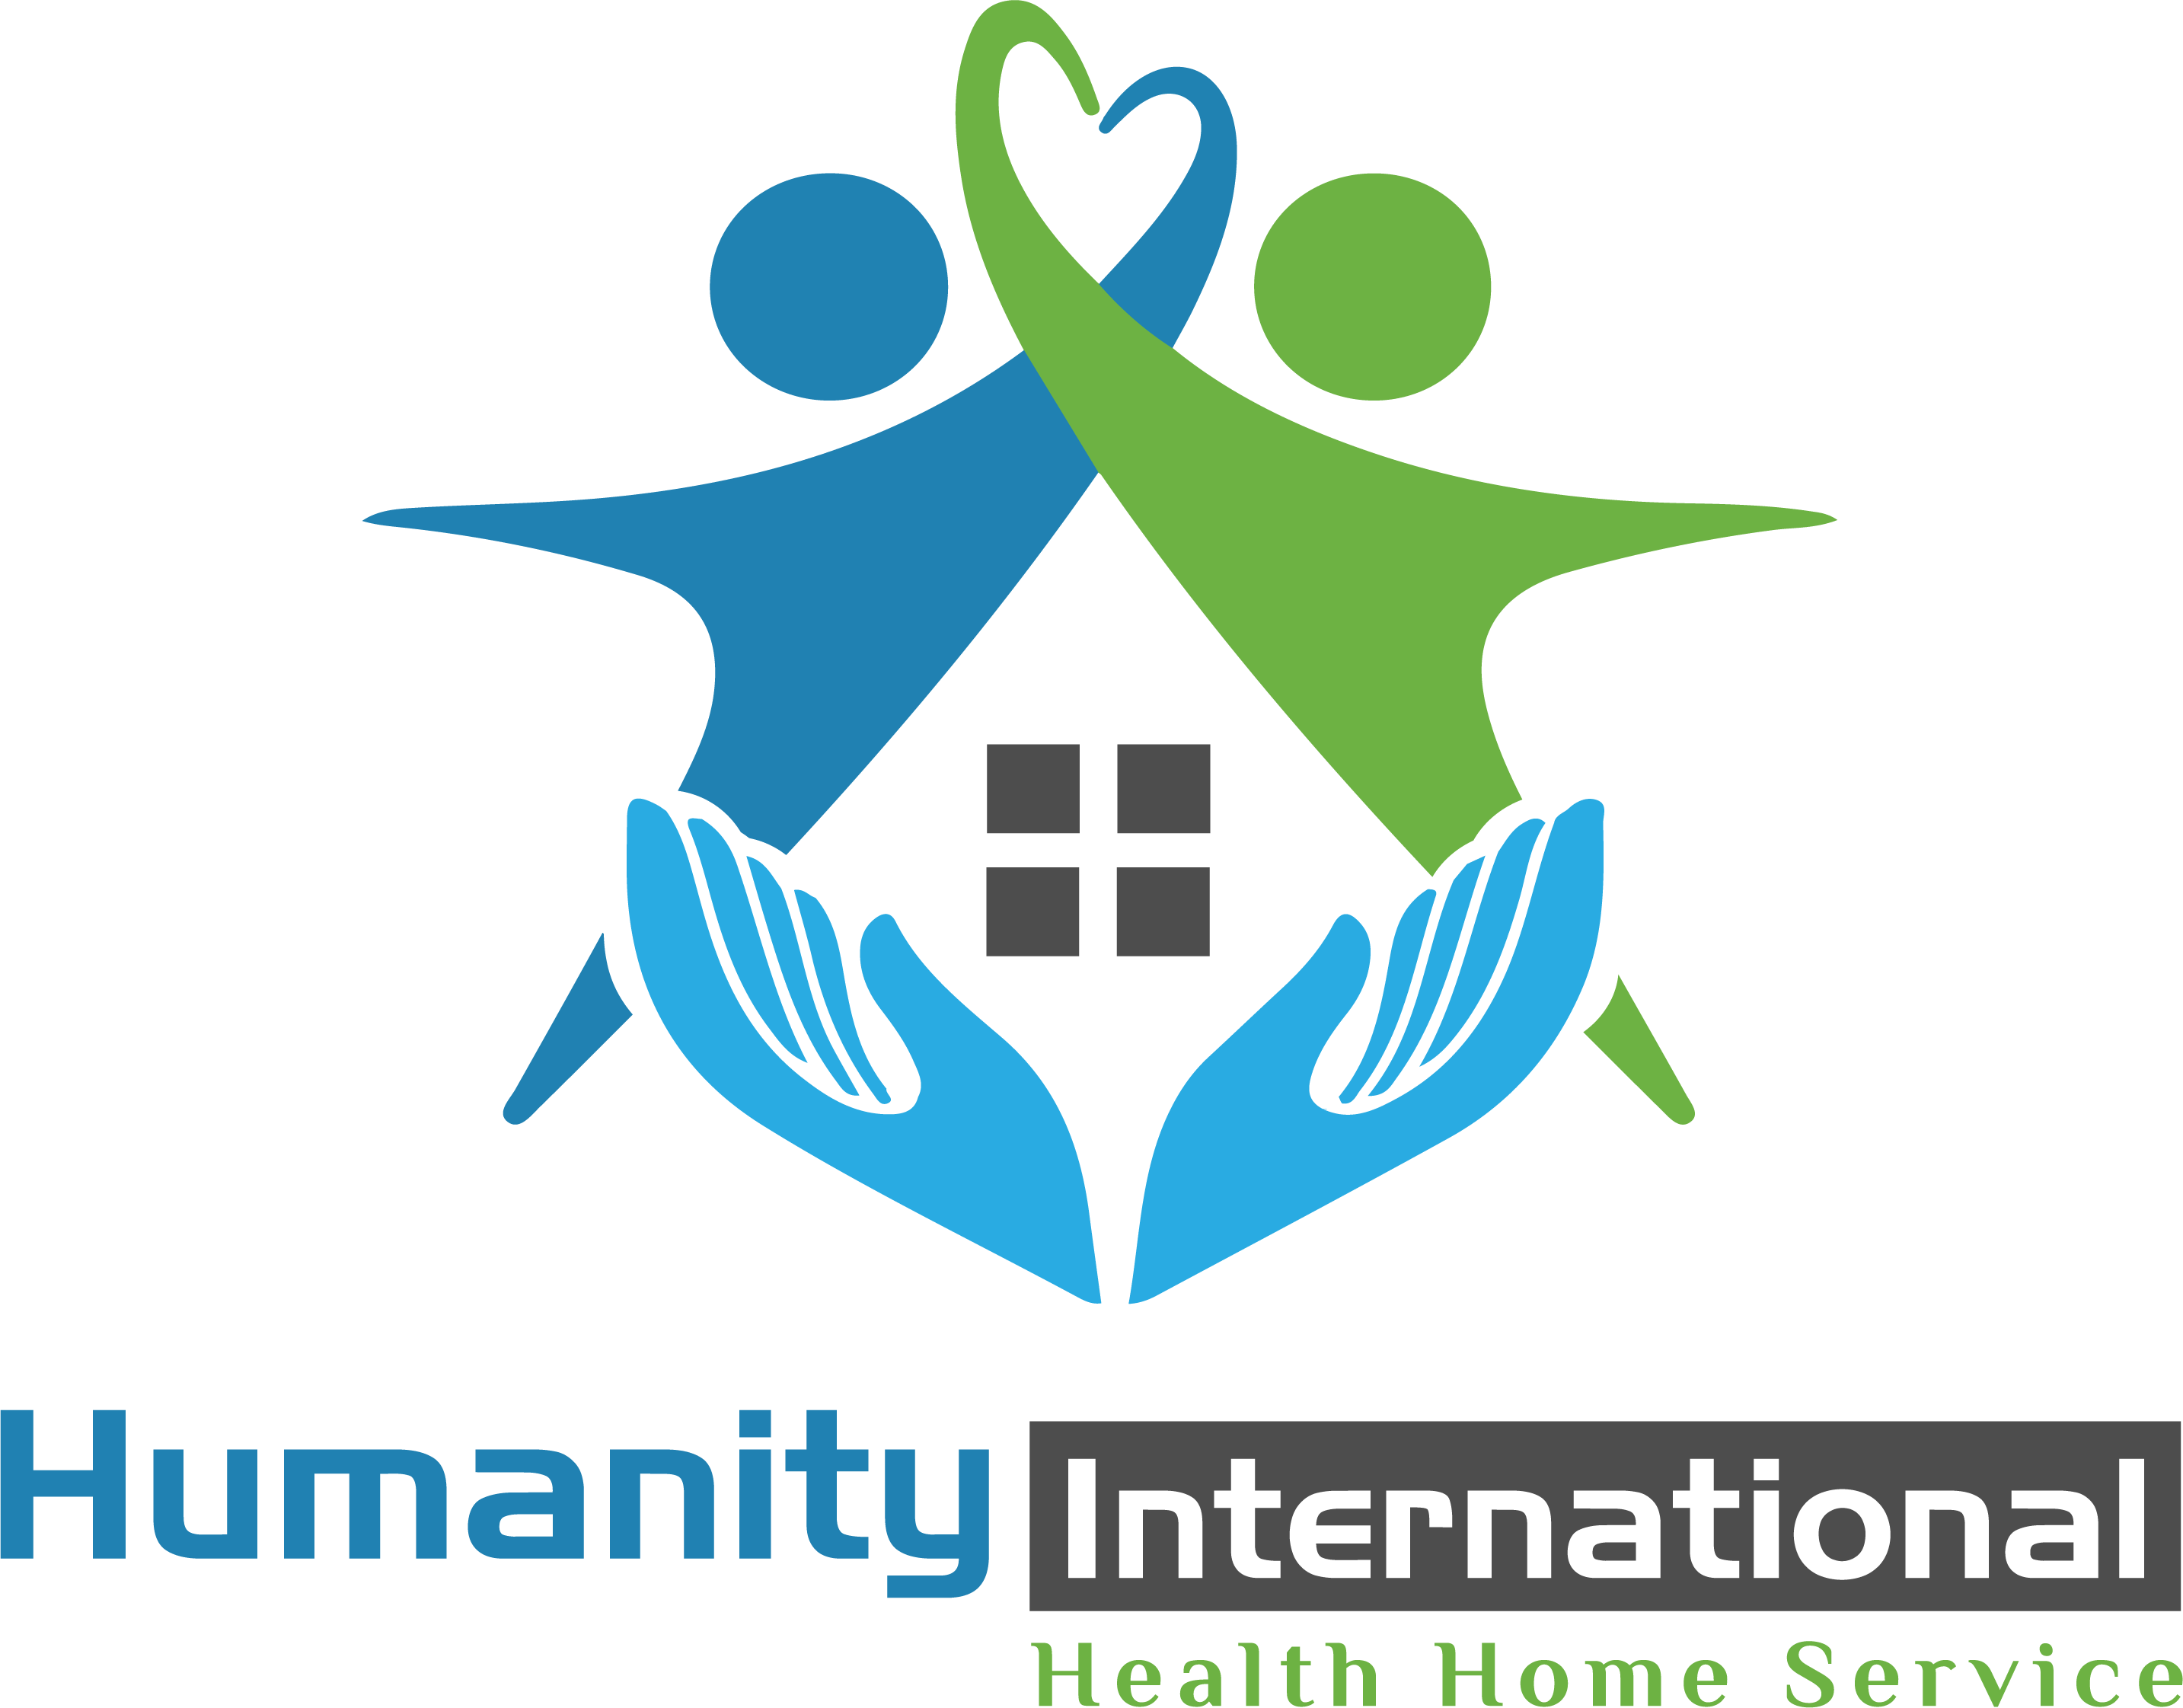 Humanity International Health Home Service – HIHHS